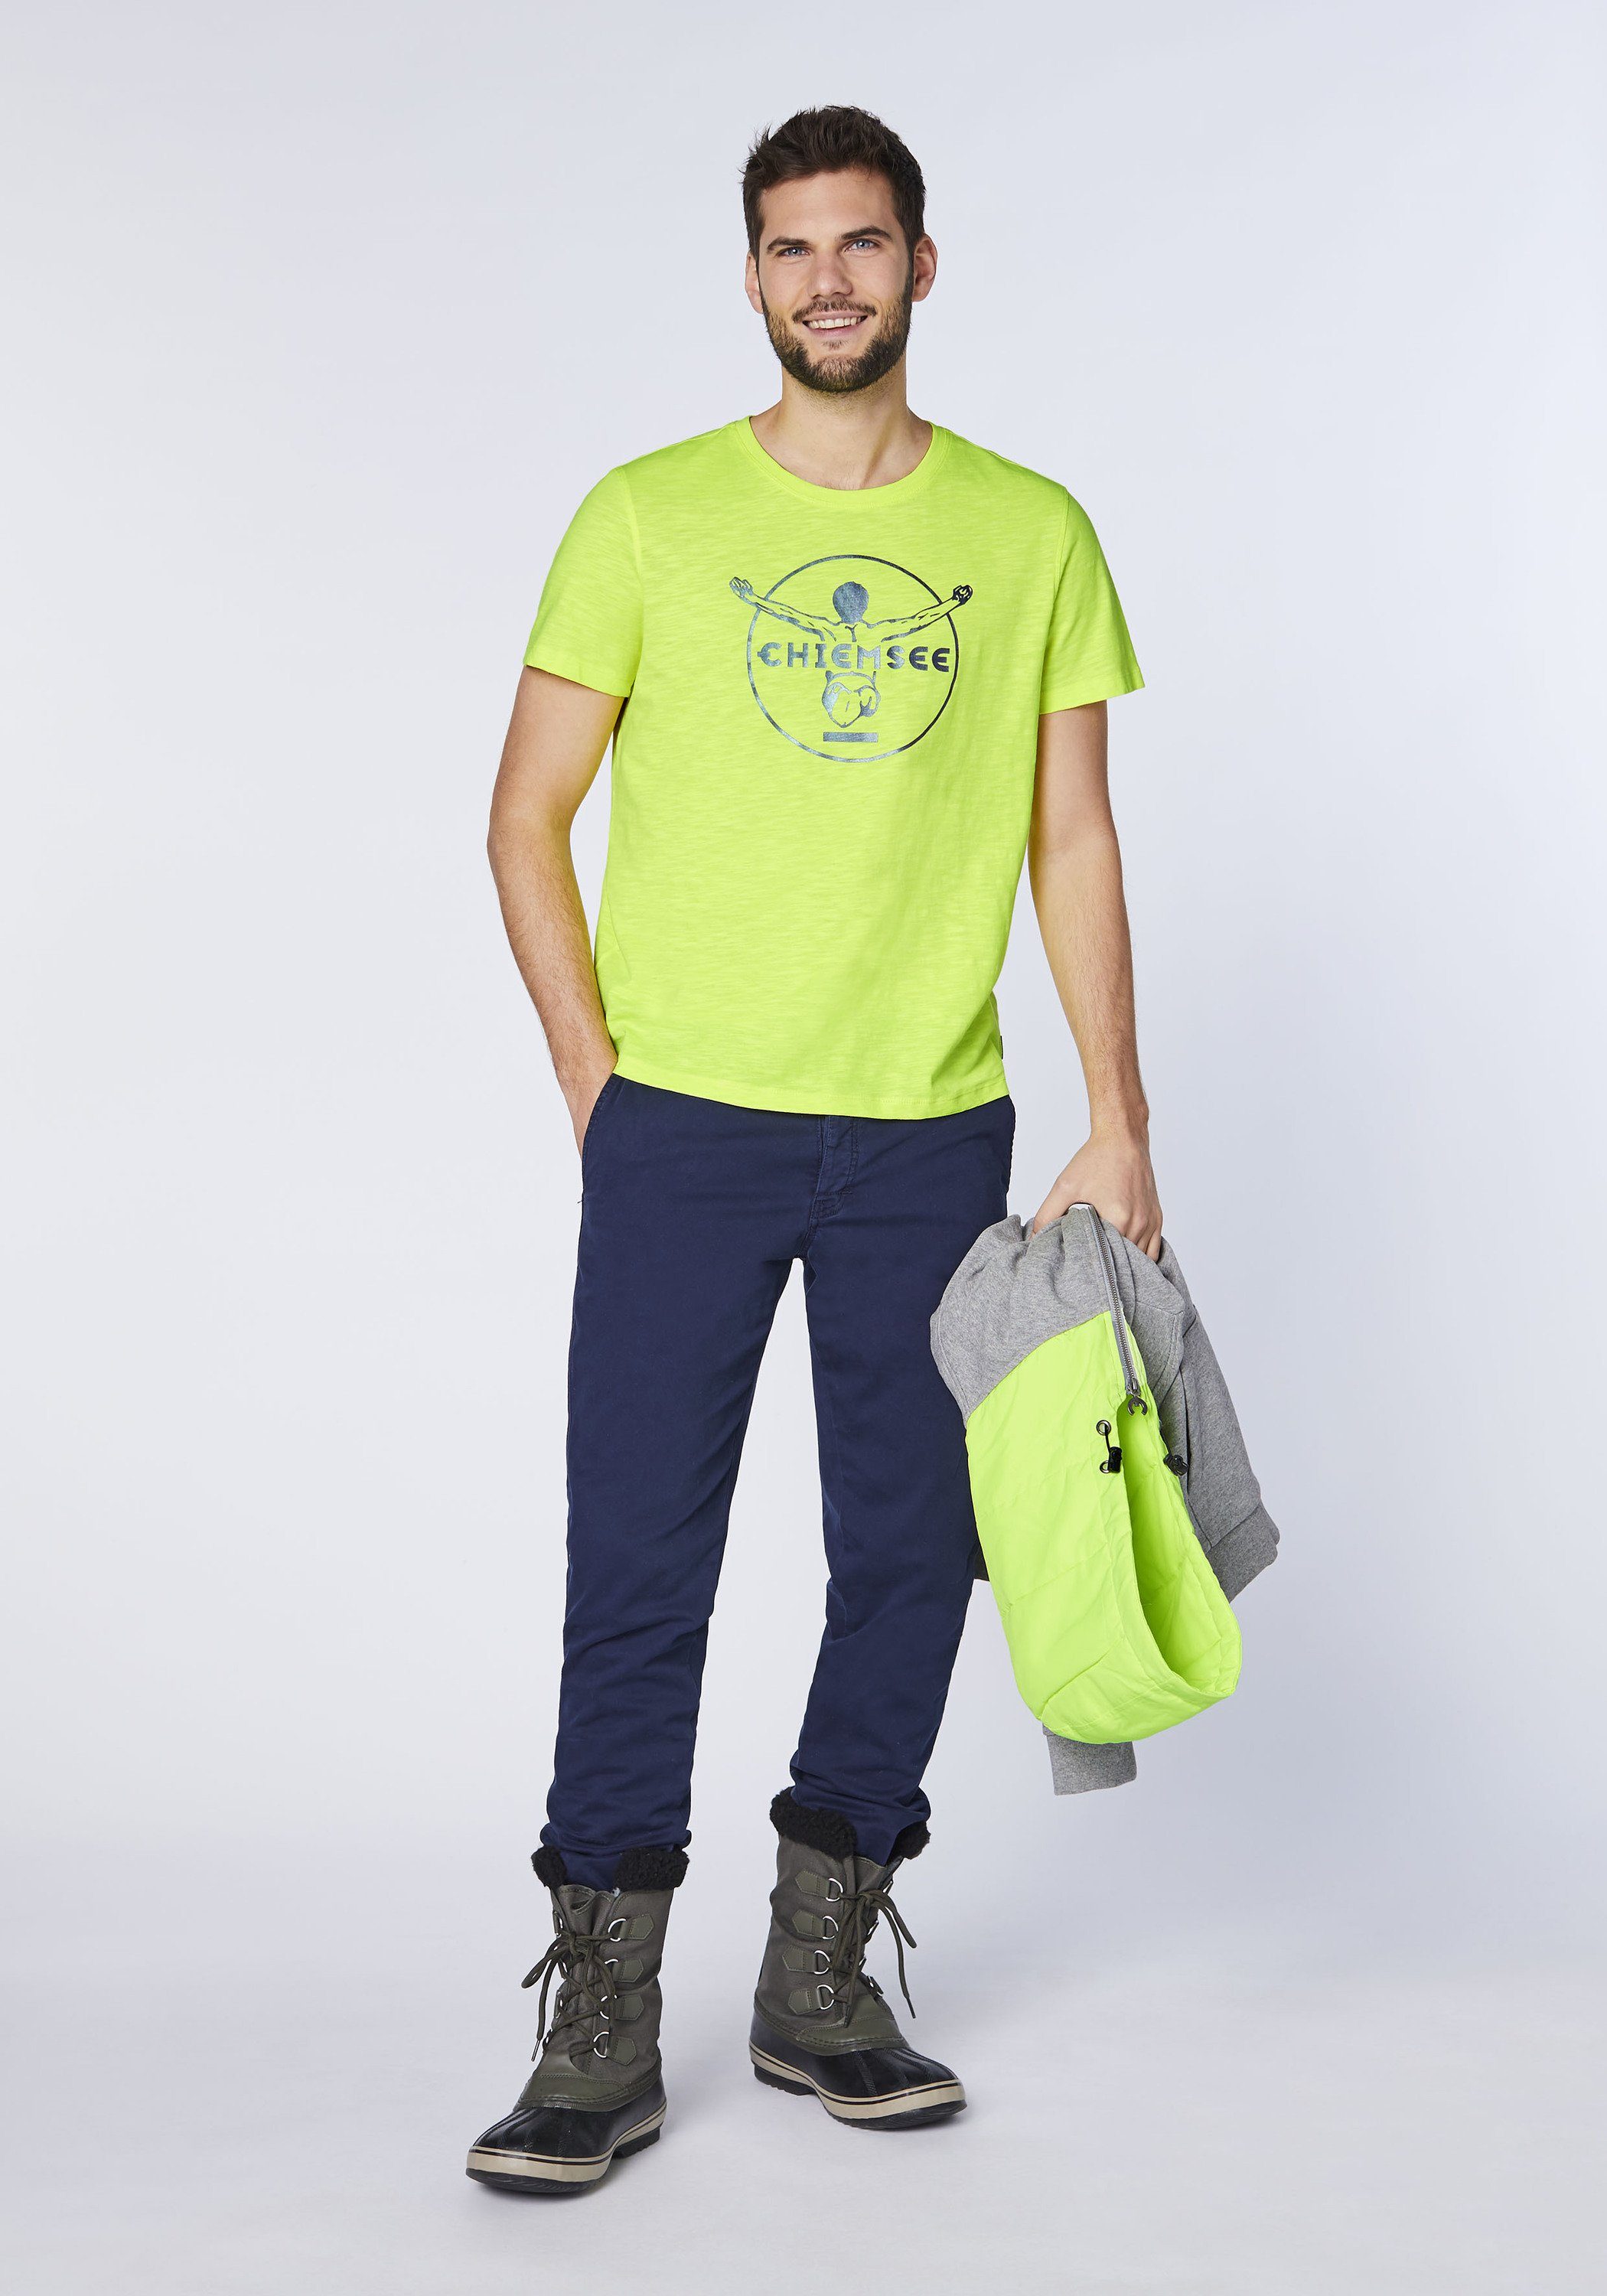 Yellow mit Print-Shirt Chiemsee 1 Safety Label-Symbol gedrucktem T-Shirt